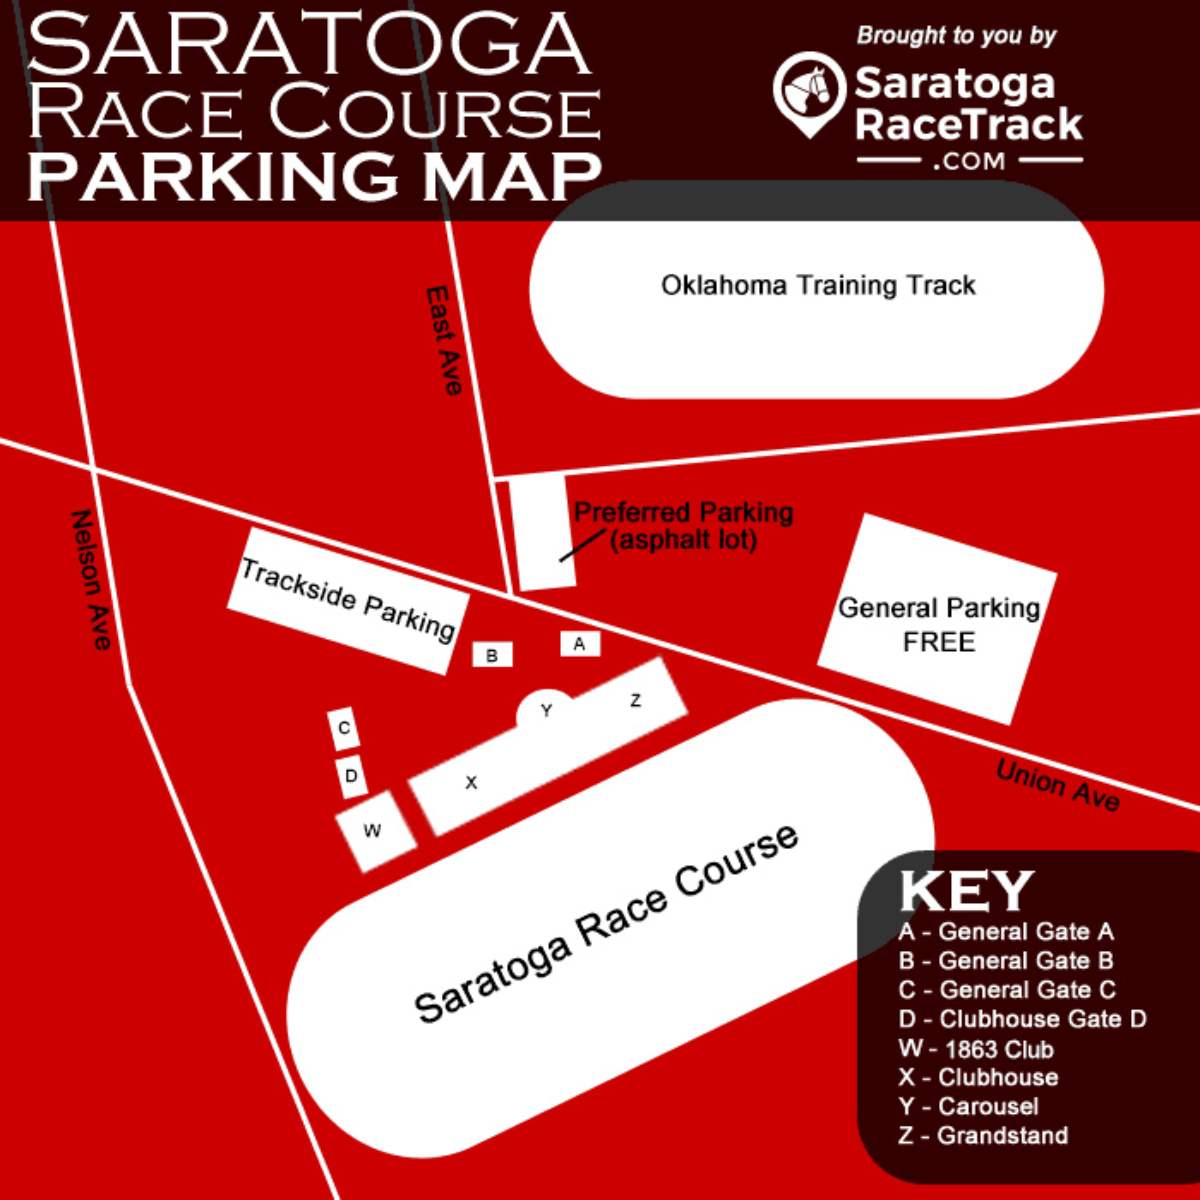 saratoga race course parking map infographic with text description below